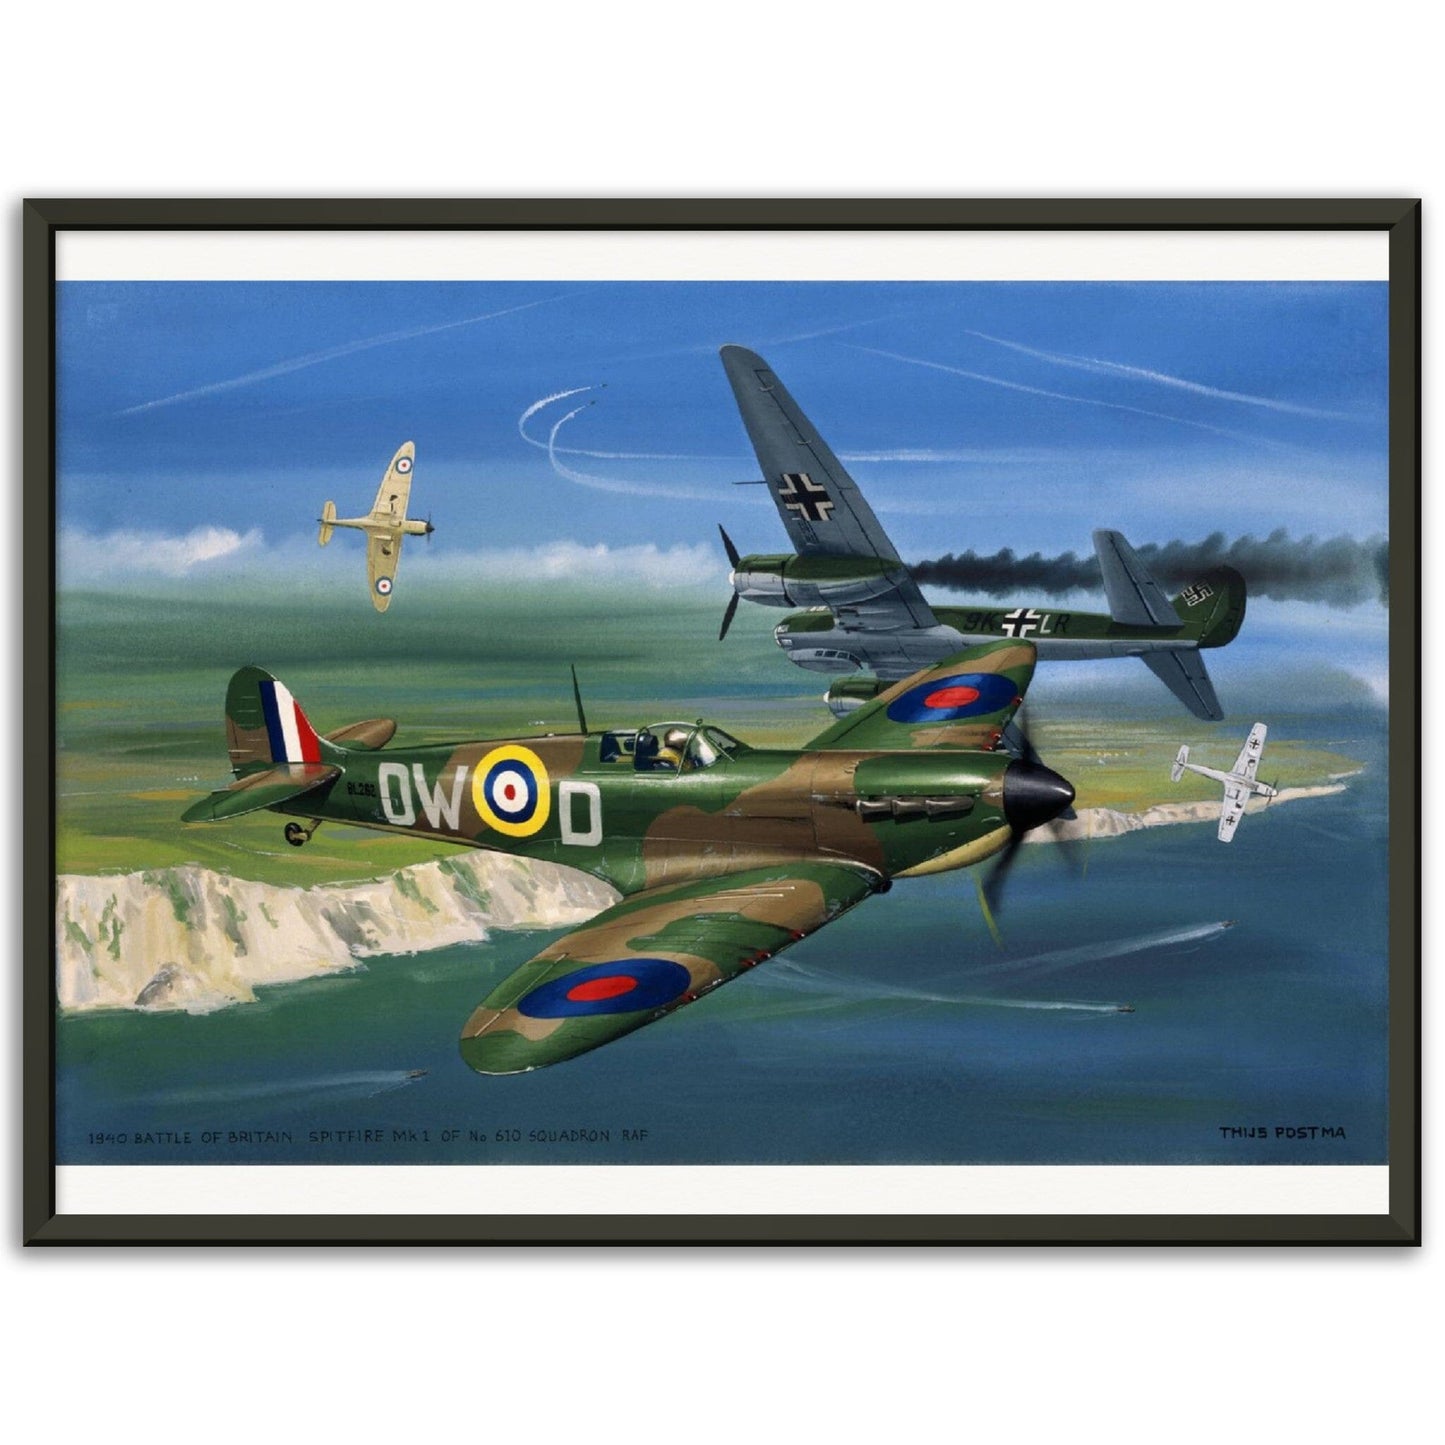 Thijs Postma - Poster - Supermarine Spitfire Mk.1 Battle Of Britain - Metal Frame Poster - Metal Frame TP Aviation Art 45x60 cm / 18x24″ Black 